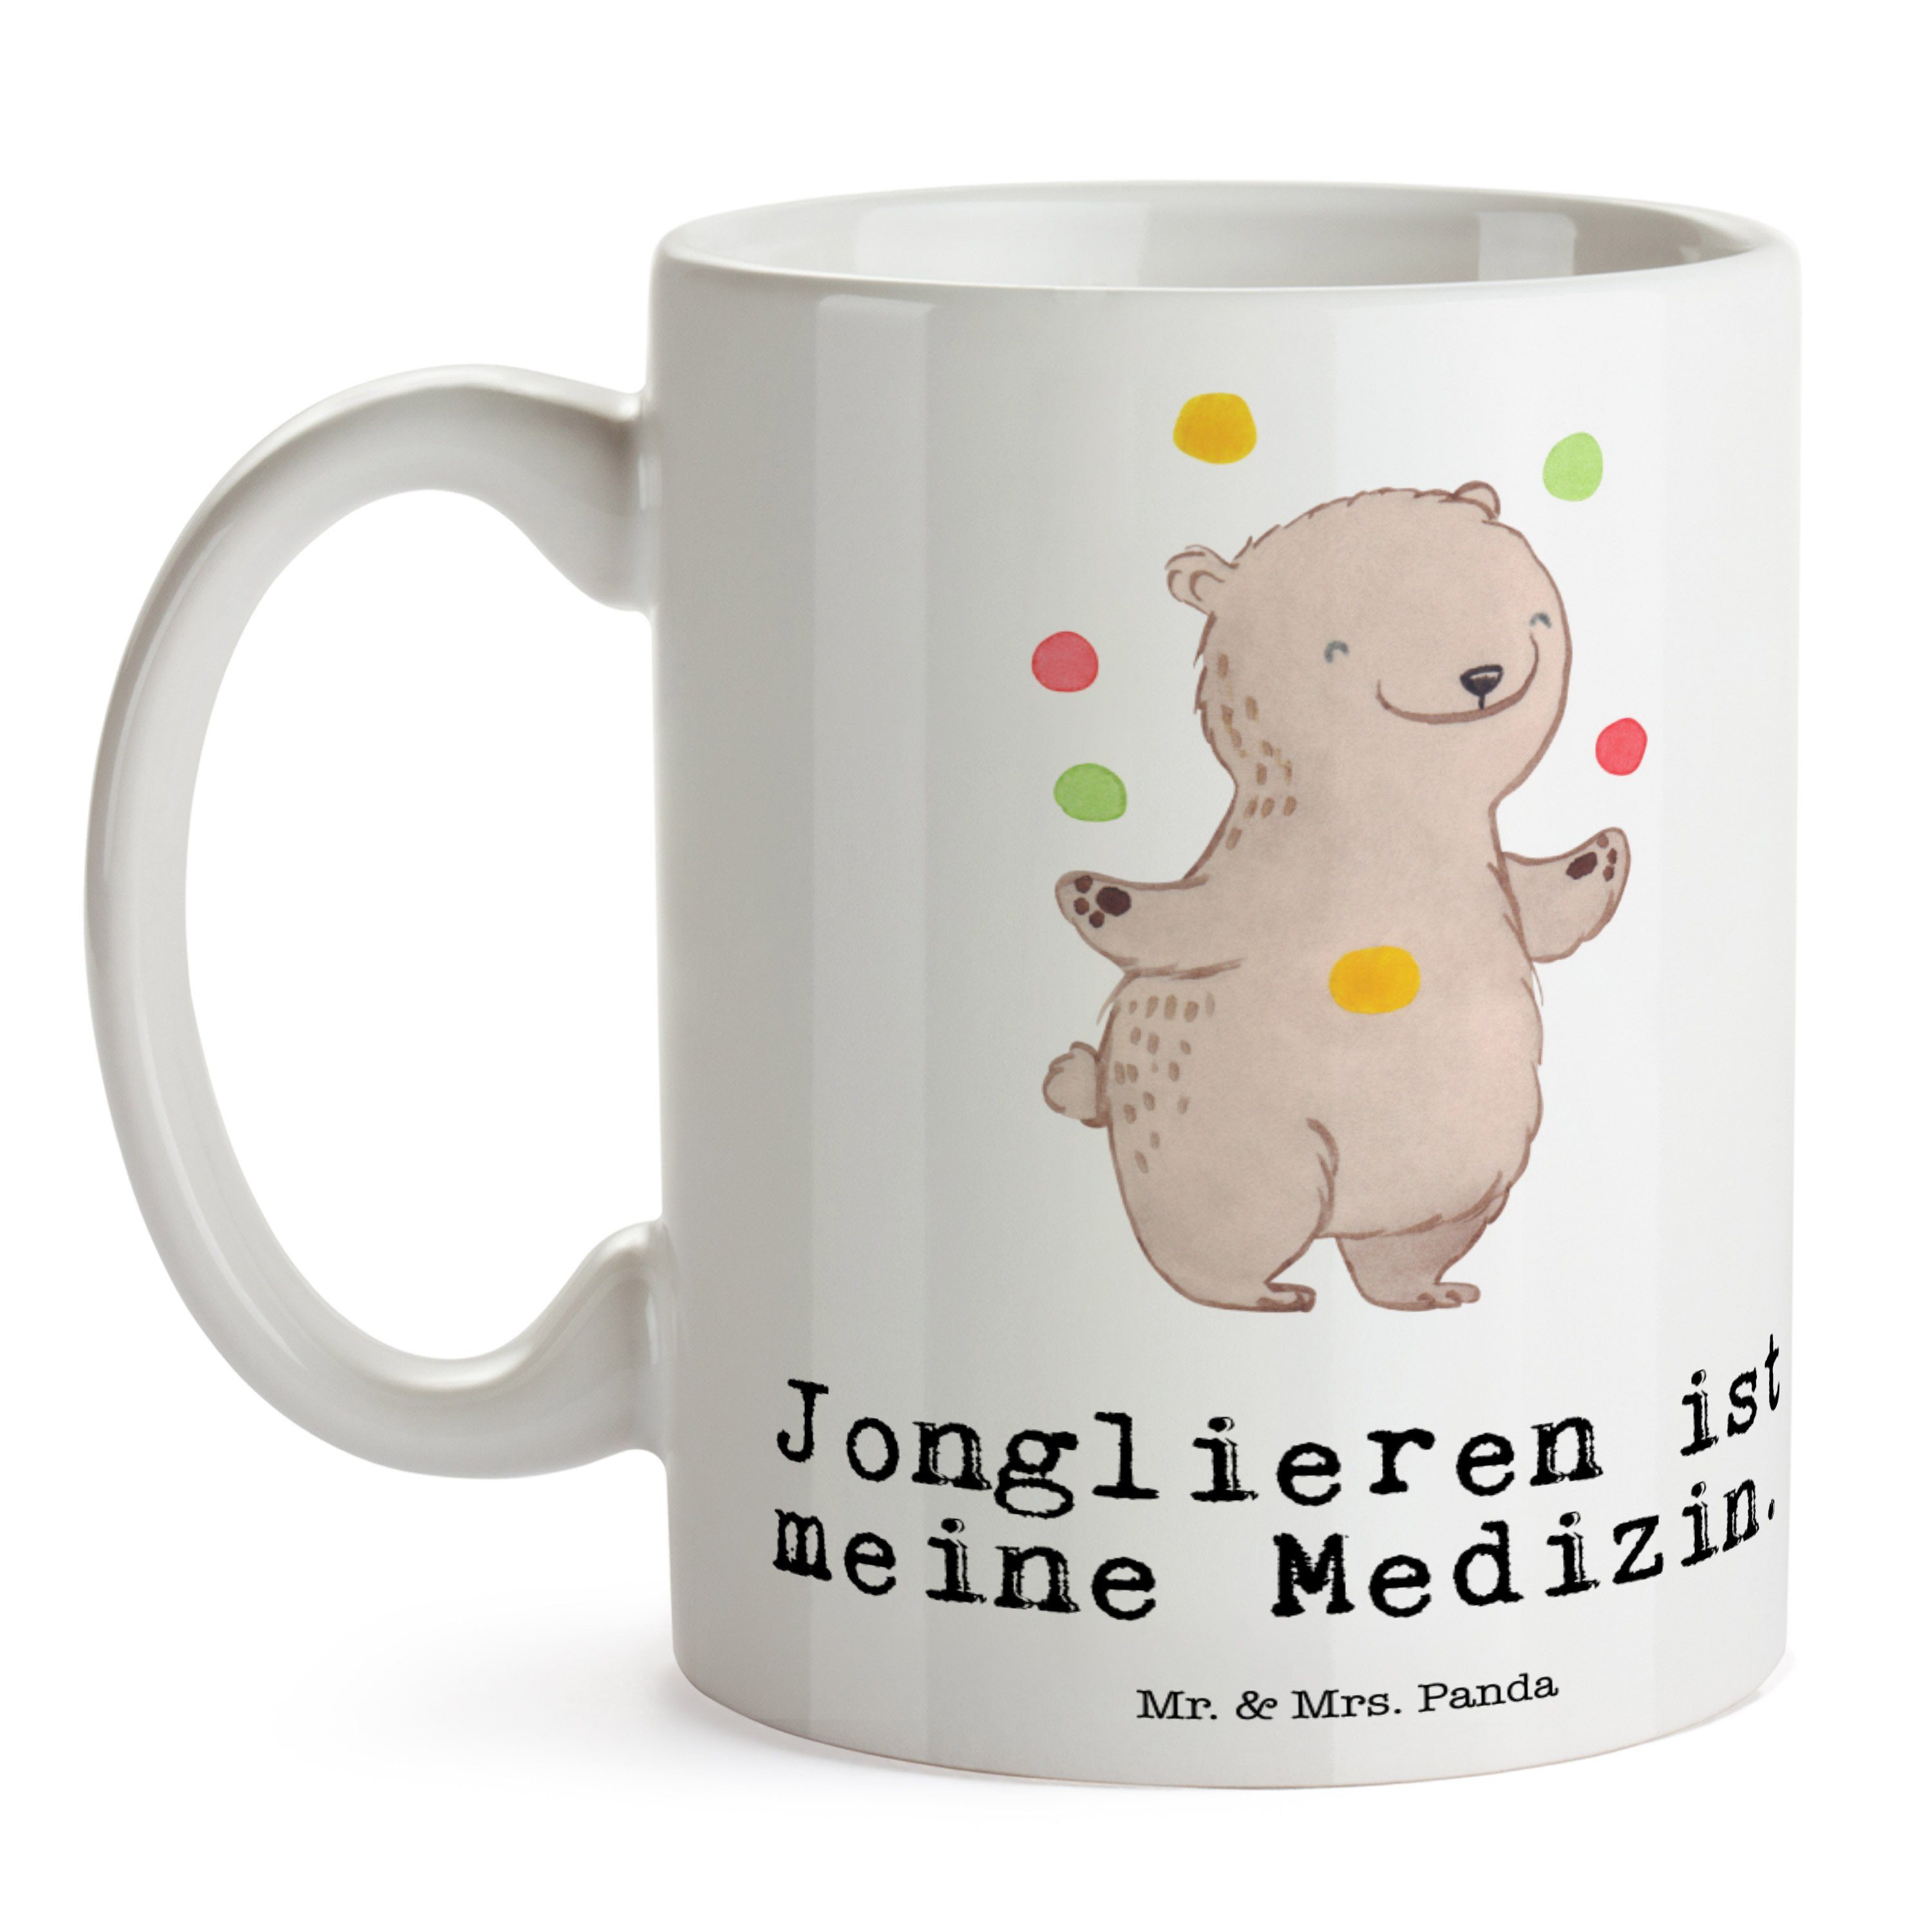 Mr. & Mrs. Panda - Jonglieren Tasse, Medizin - Tasse Keramik Porze, Hobby, Gewinn, Geschenk, Weiß Bär